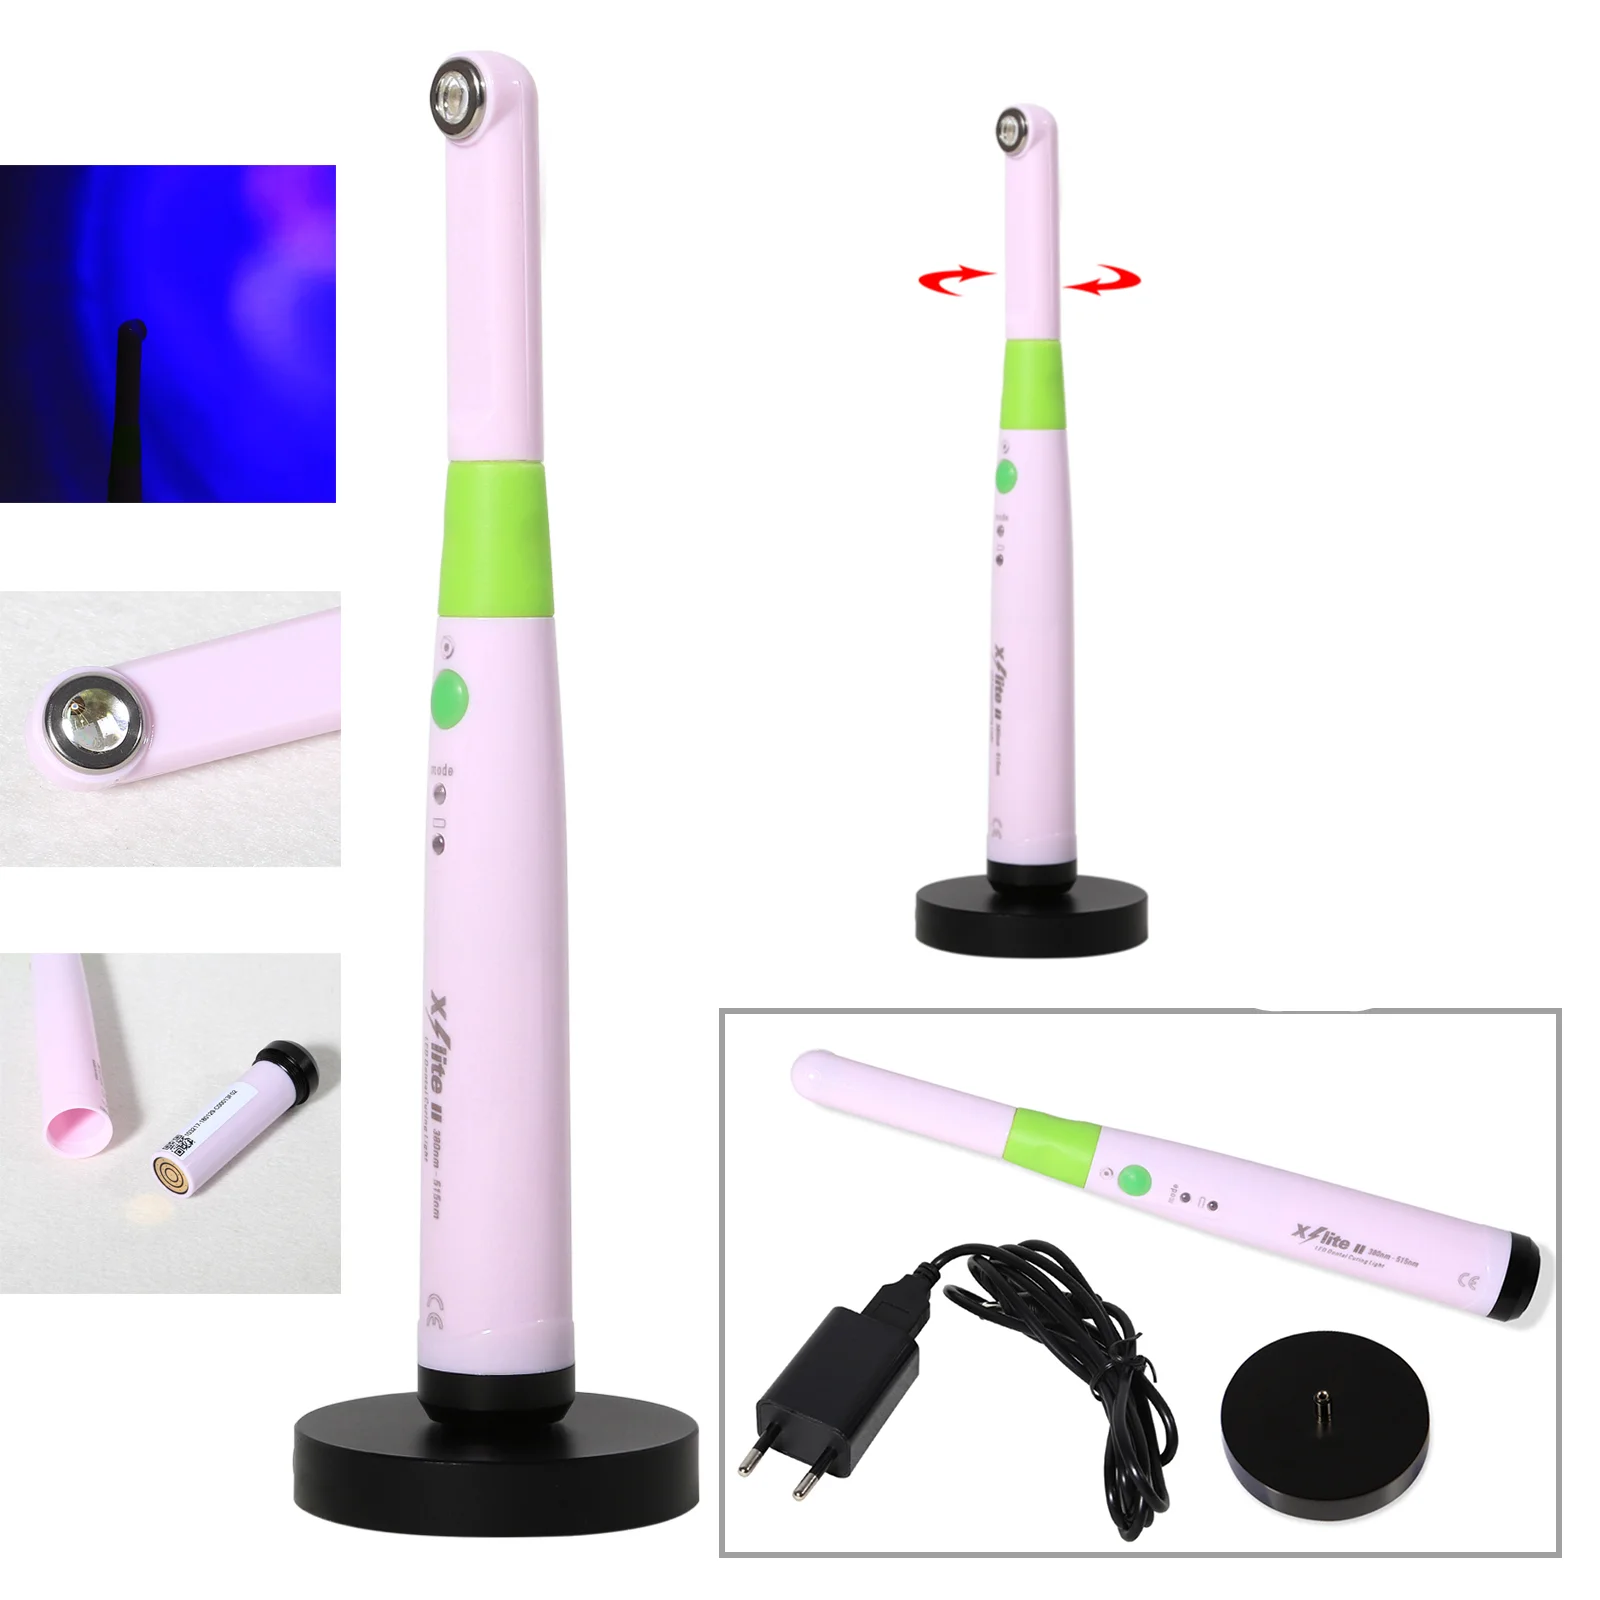 2pcs Dental Cordless /Wireless Curing-Light Lamp 1200mW 360 Rotate XLite II Teeth whitening Pink Color